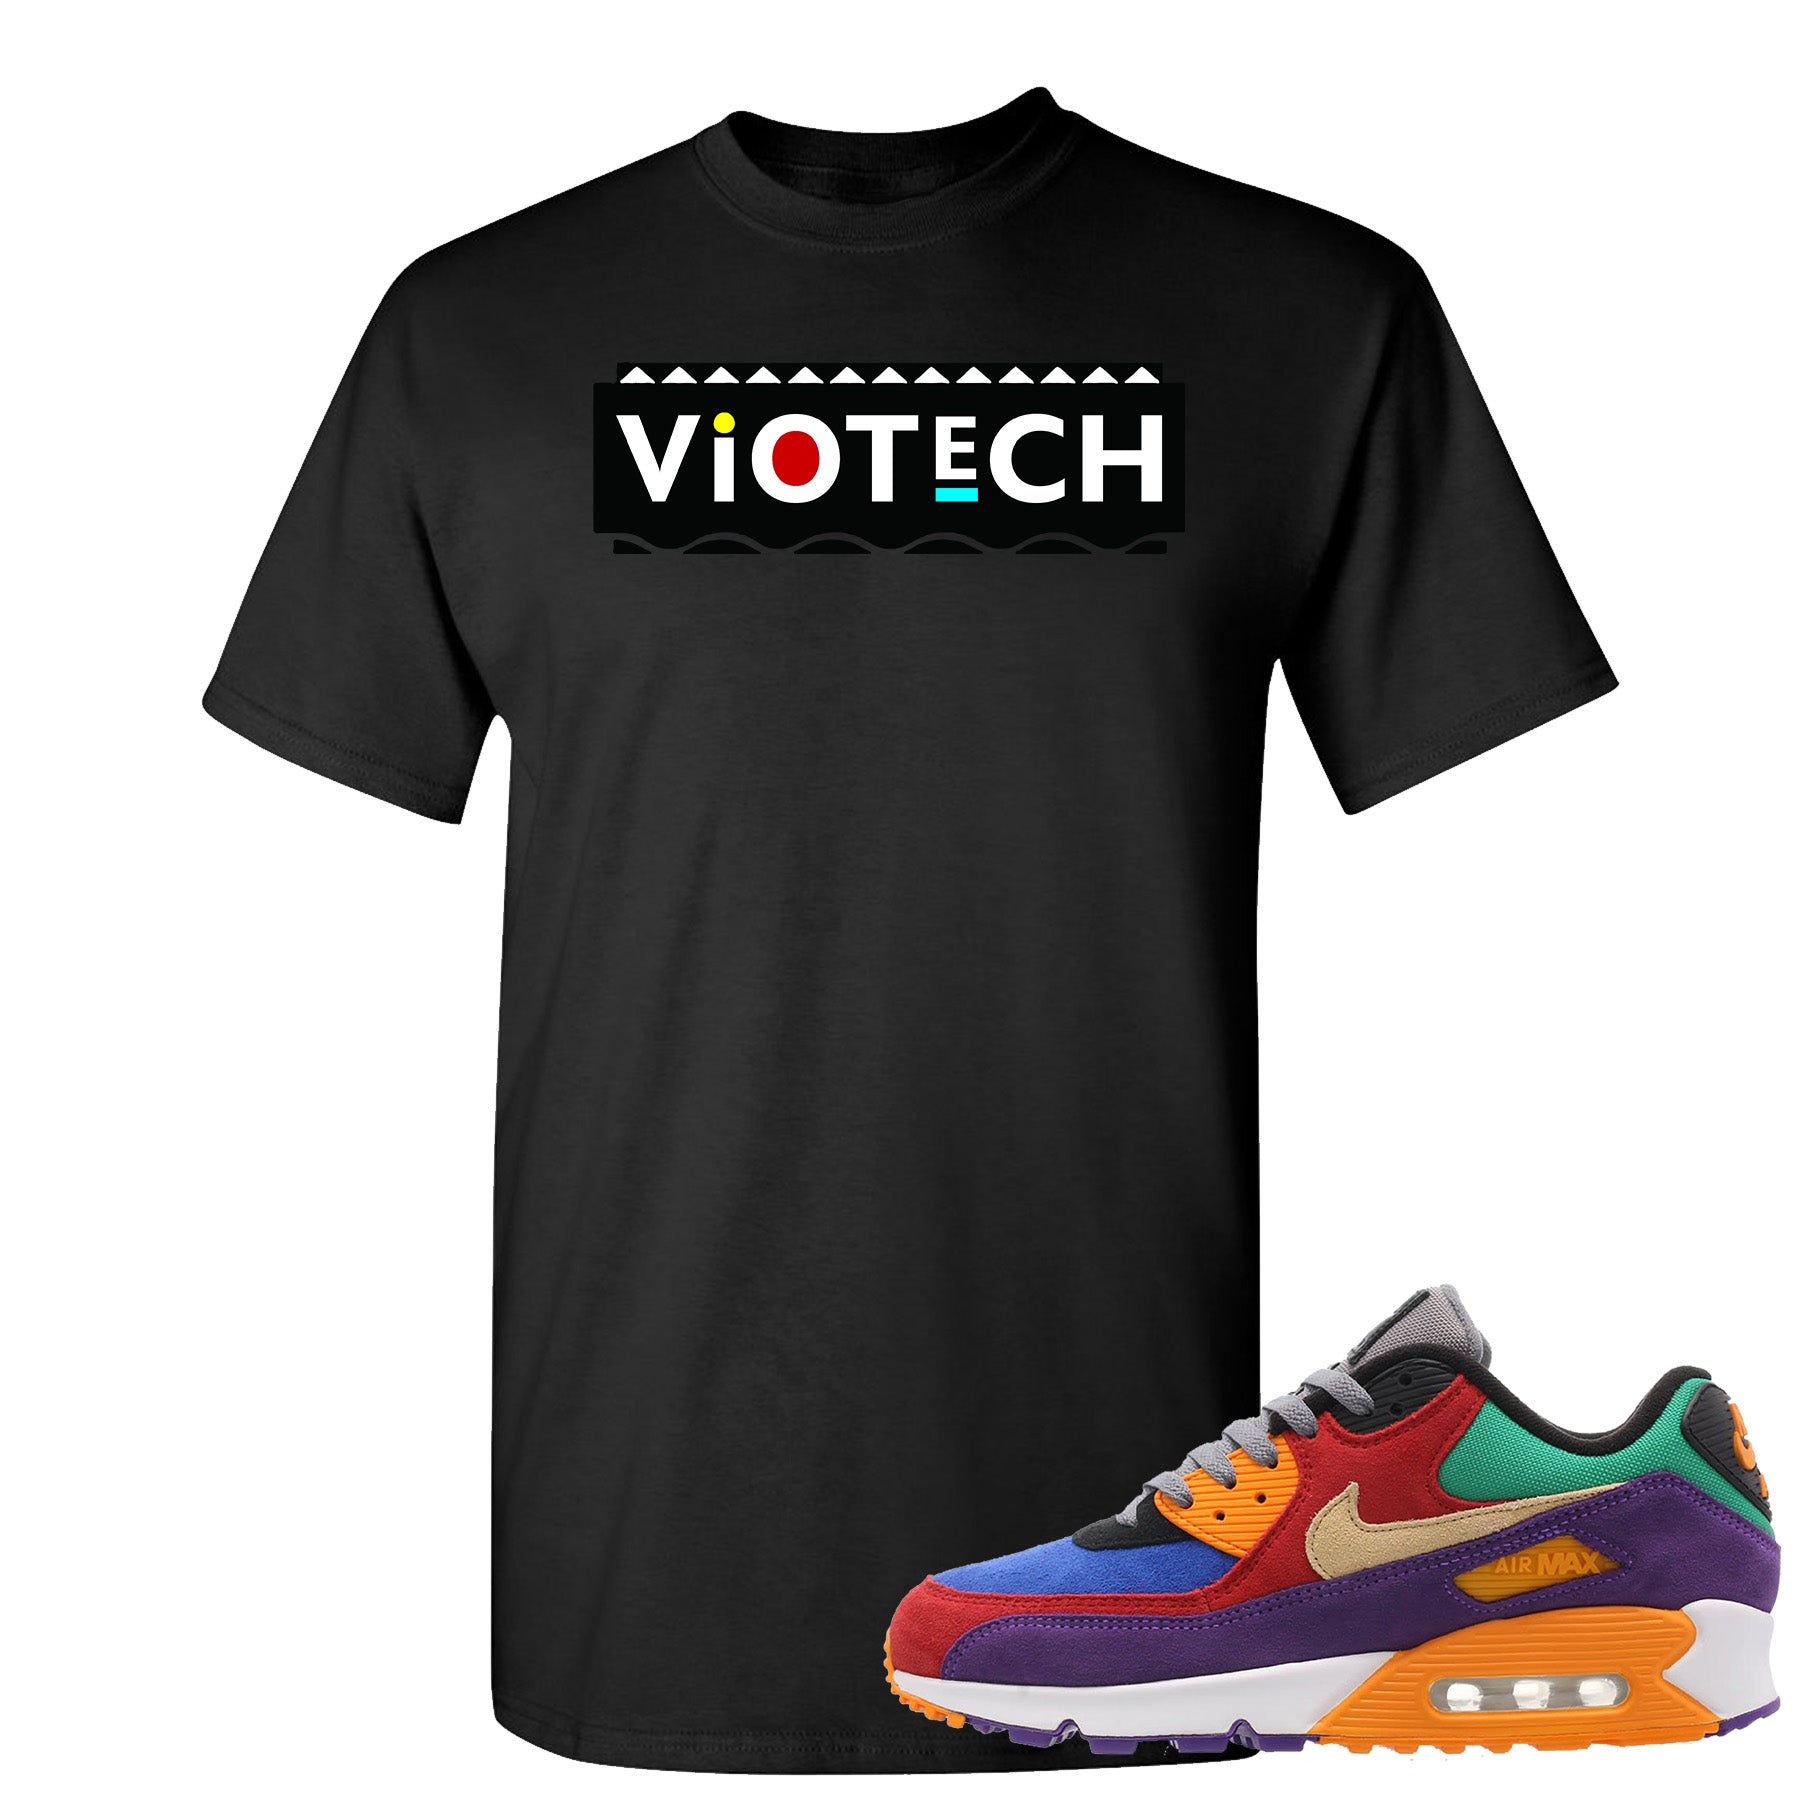 viotech shirt